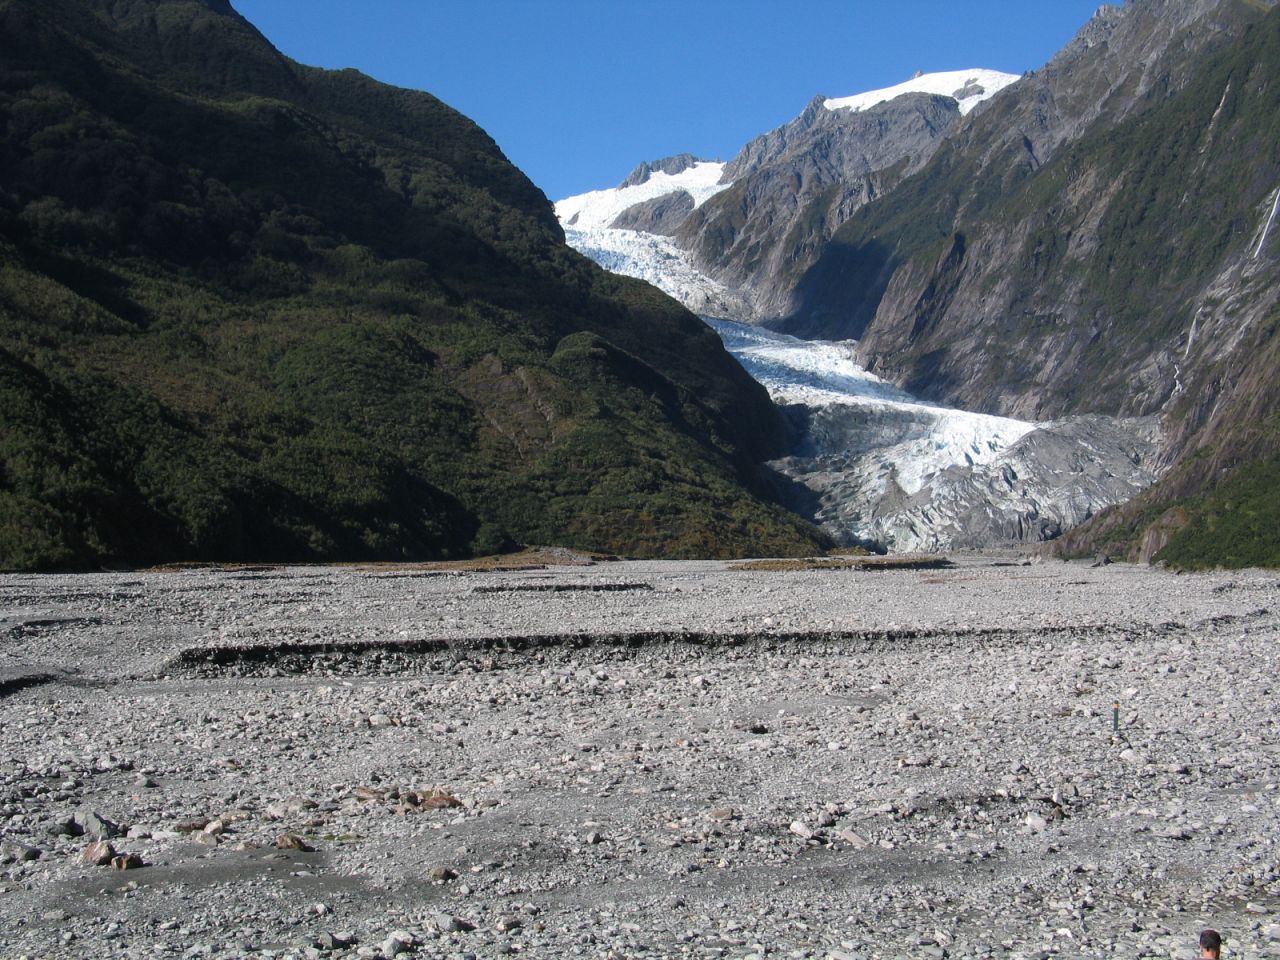 fotka / image Franz Josef Glacier, New Zealand, kolekce E